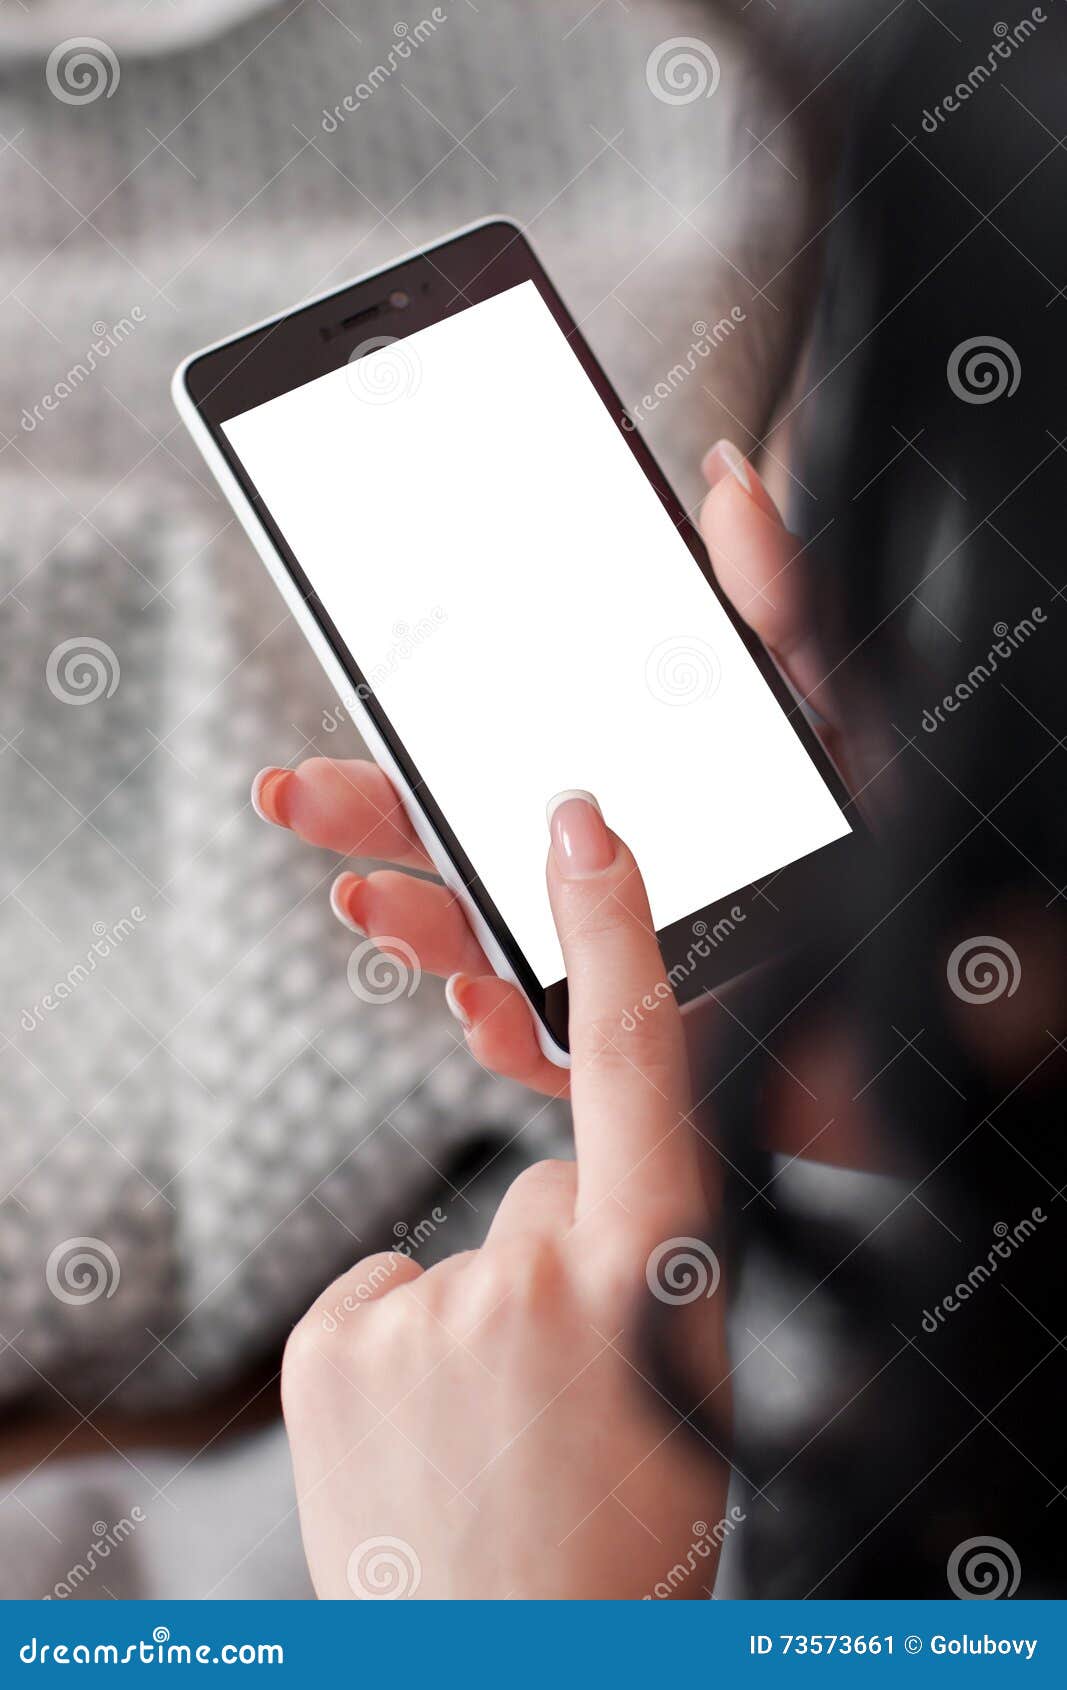 cell phone selfies fingering